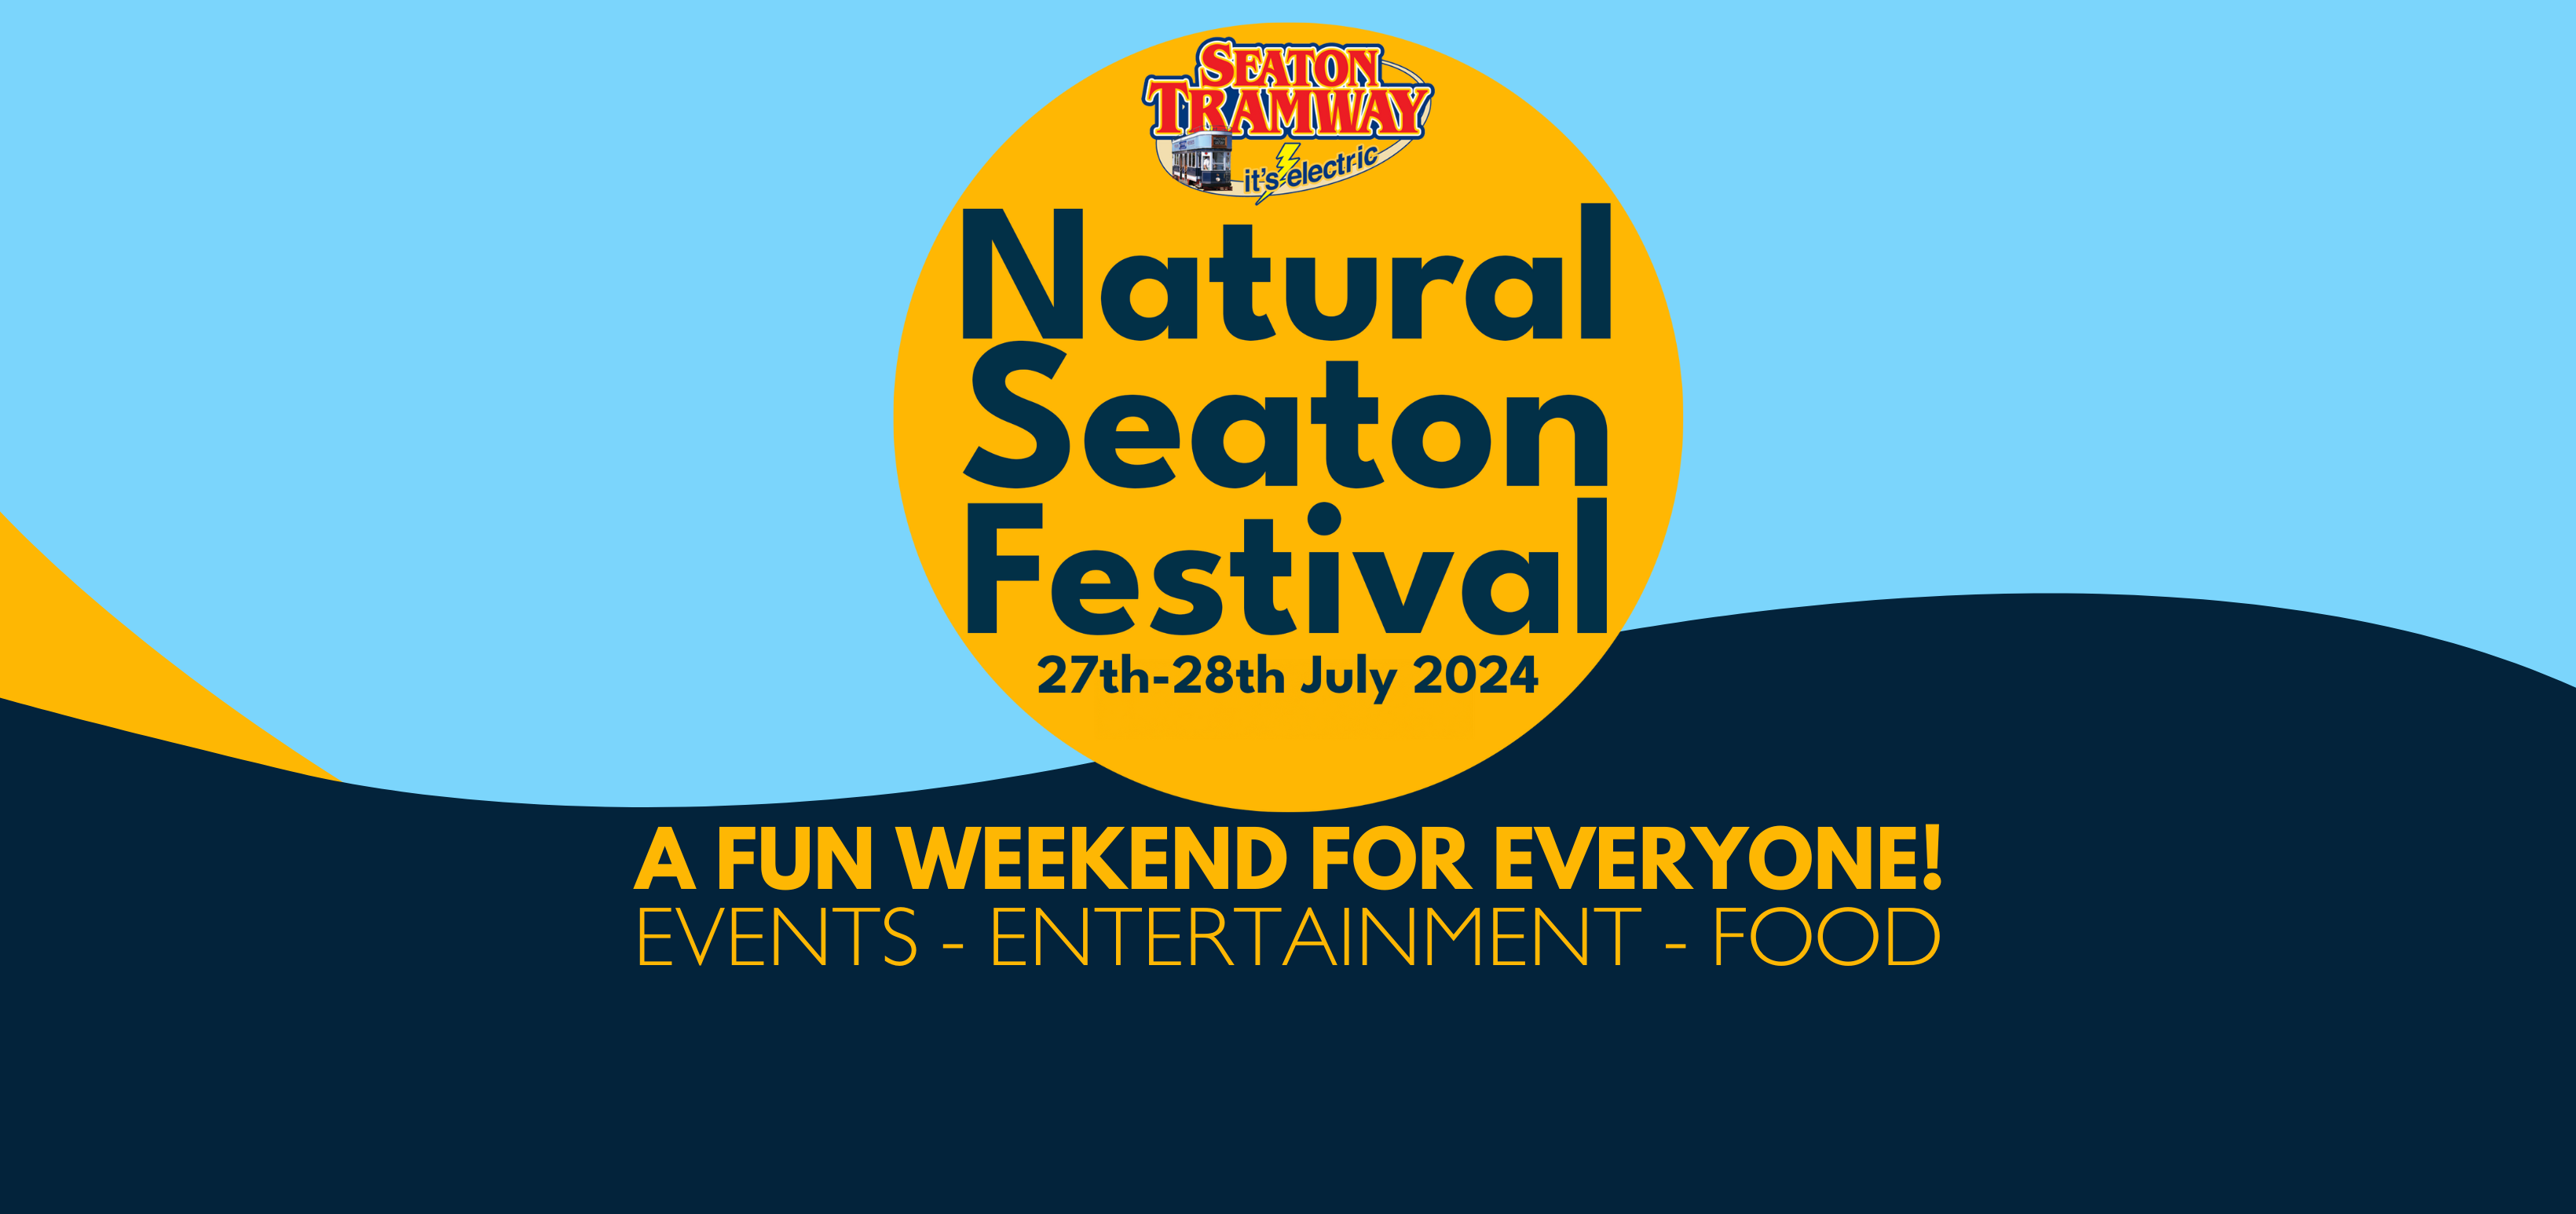 Natural Seaton Festival July 27th-28th 2024